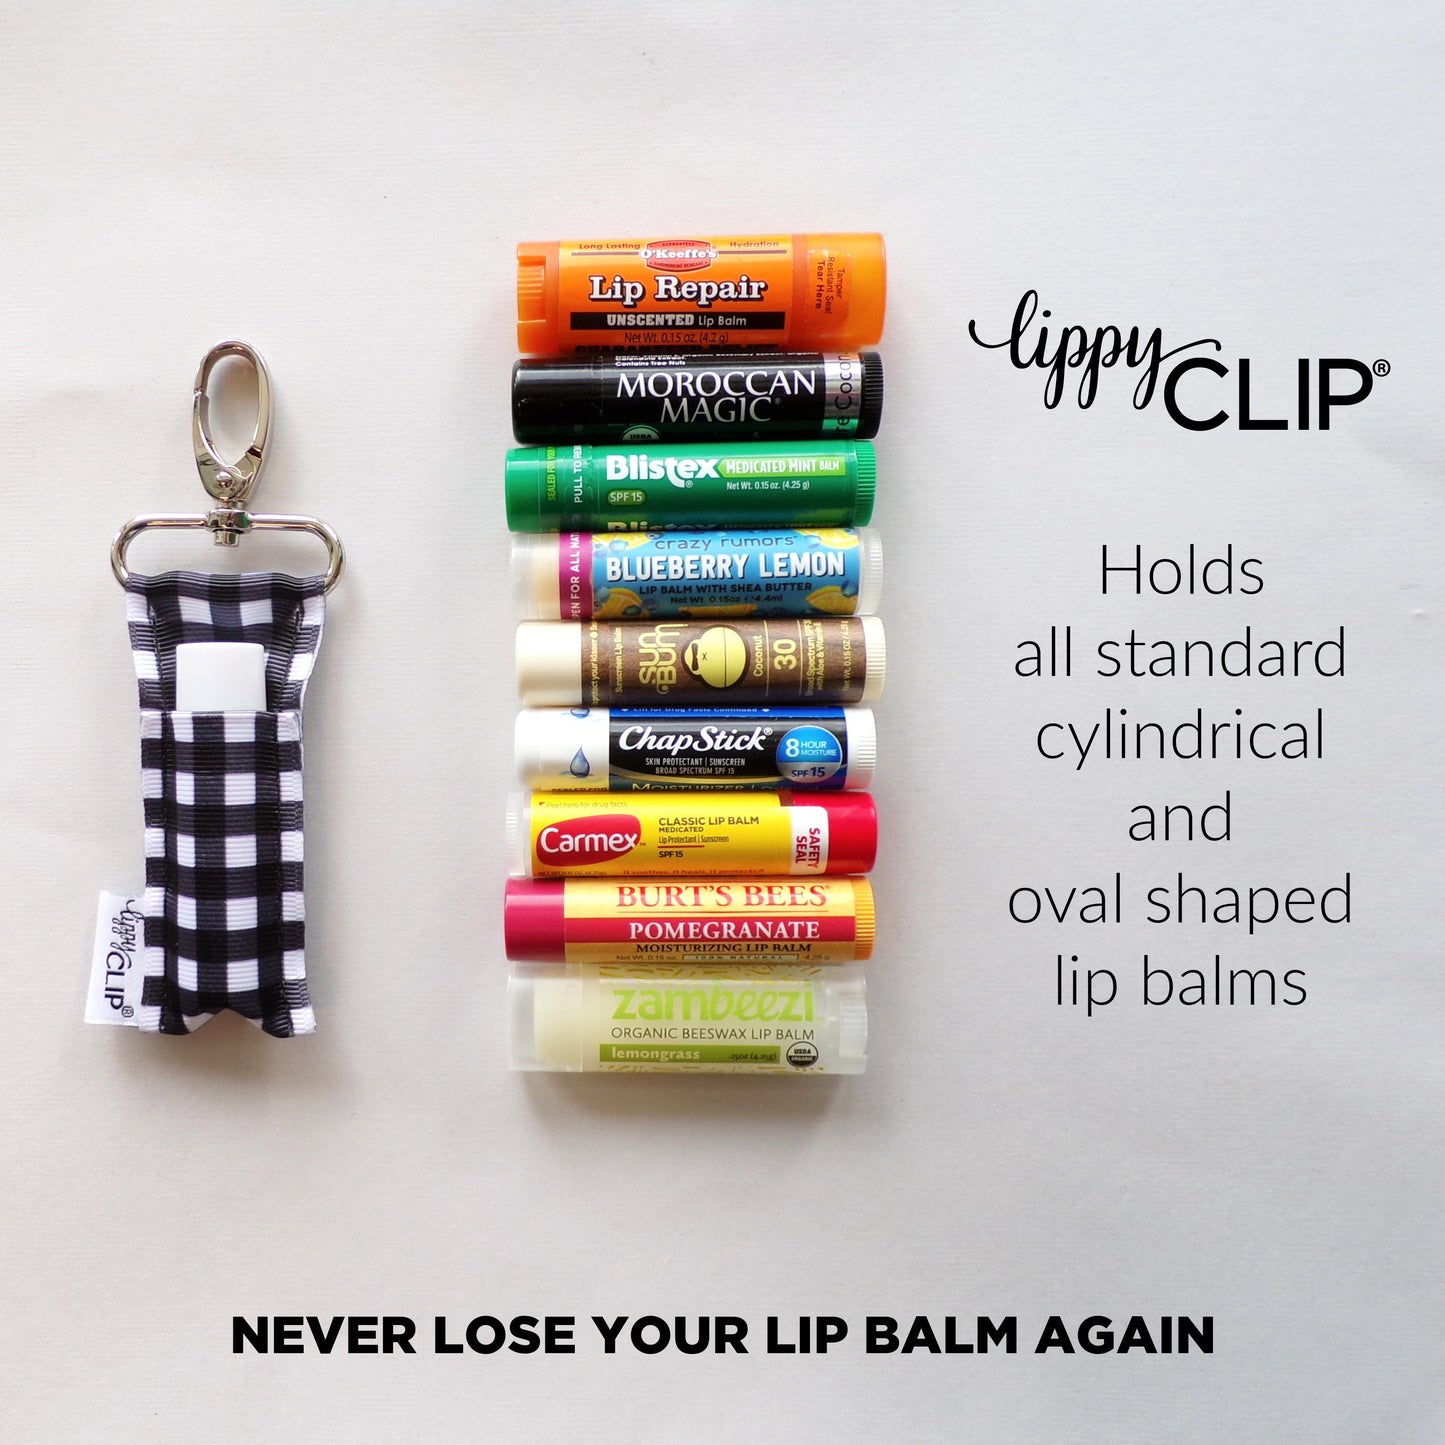 Tee Time LippyClip® Lip Balm Holder